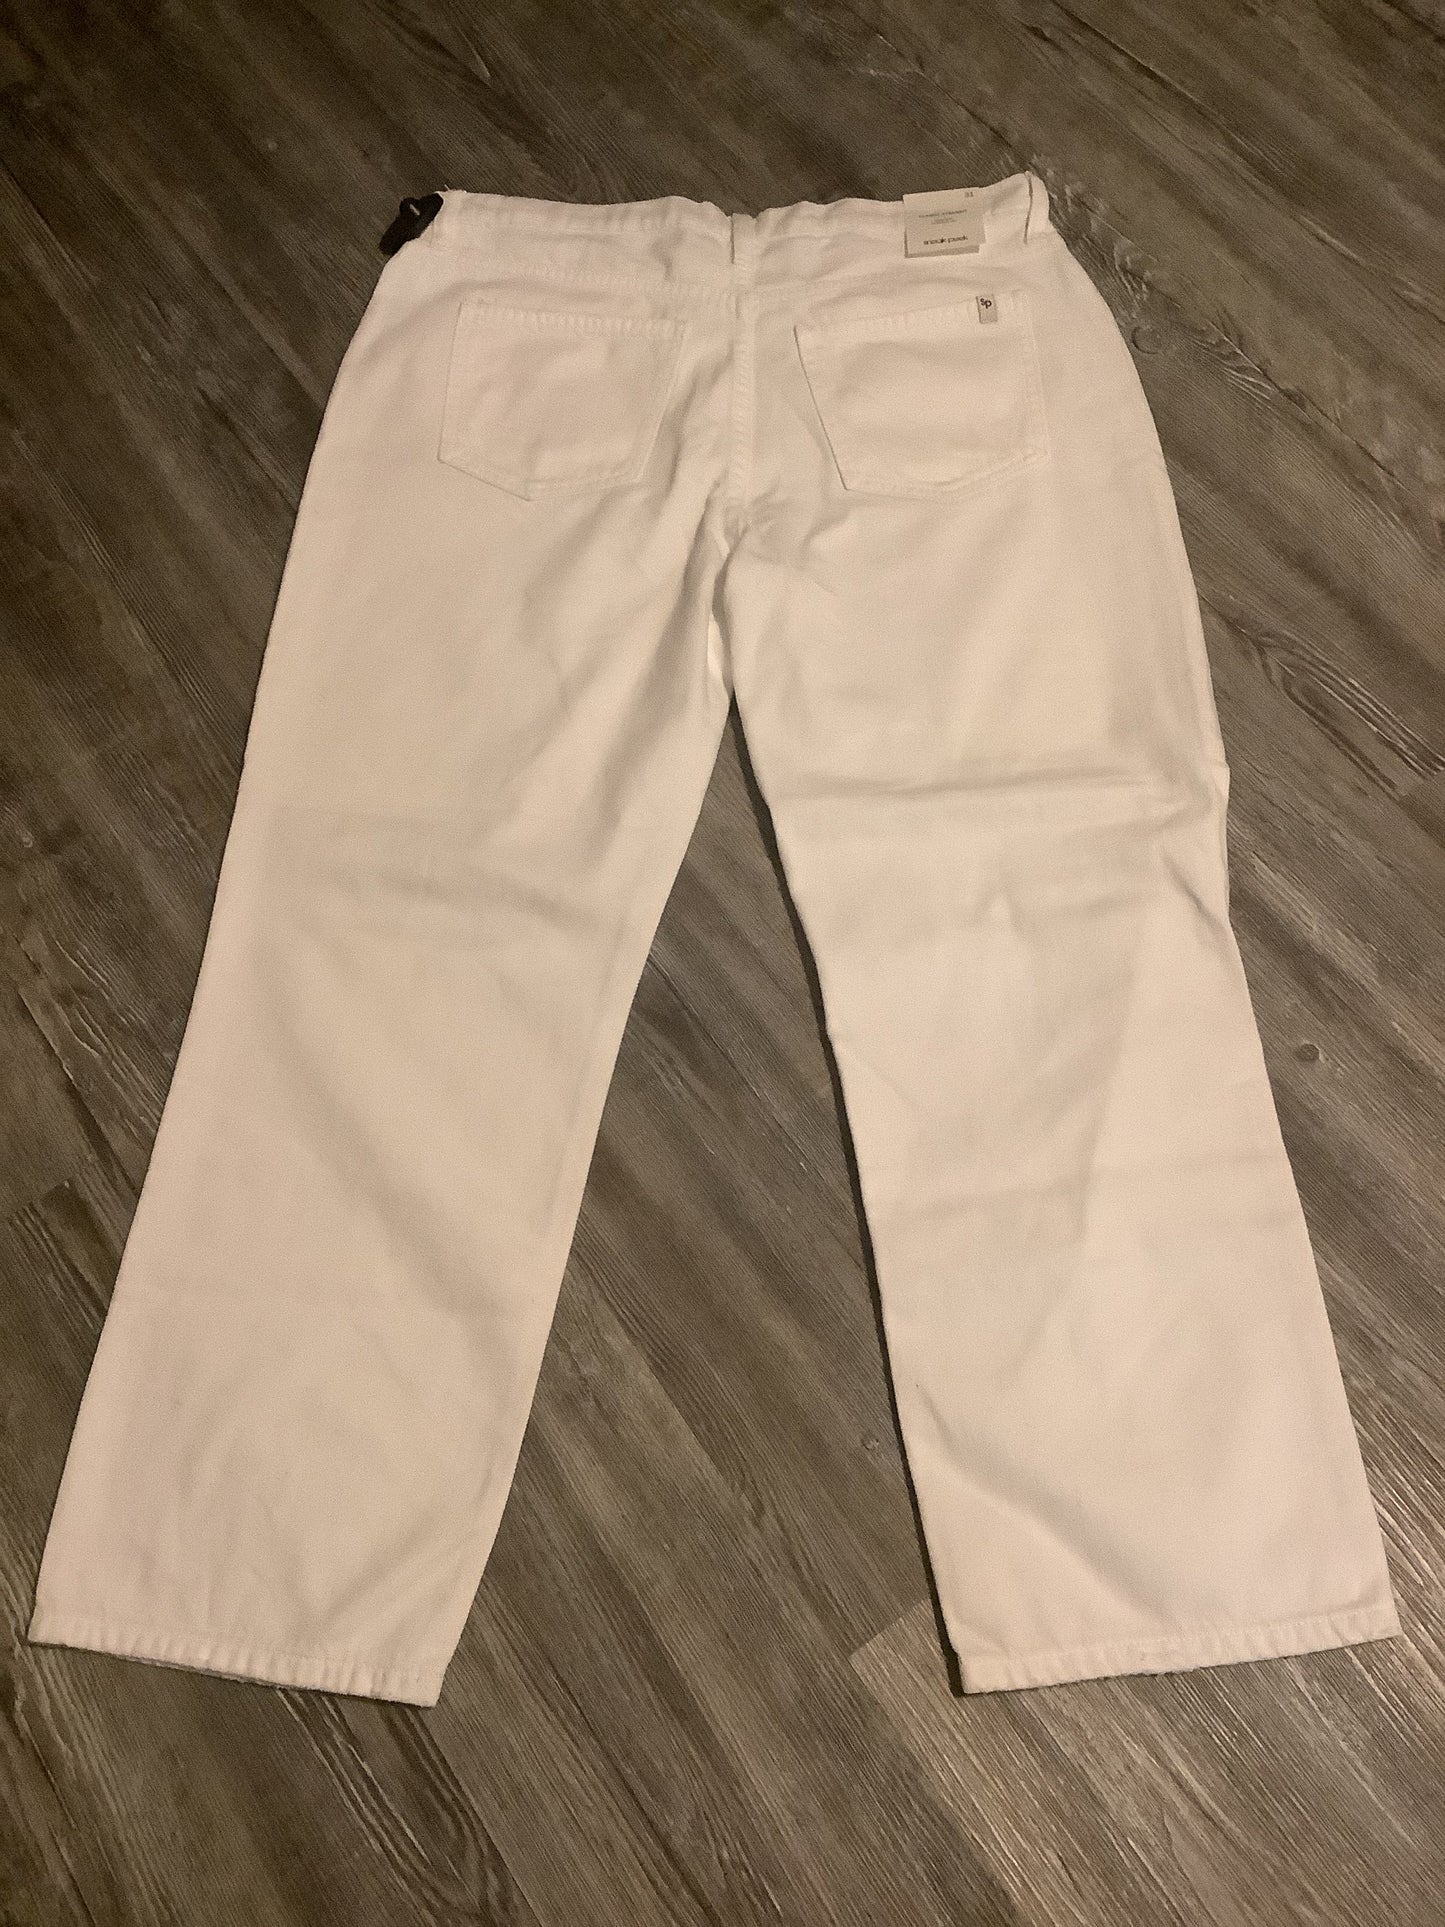 White Jeans Straight Sneak Peek, Size 12